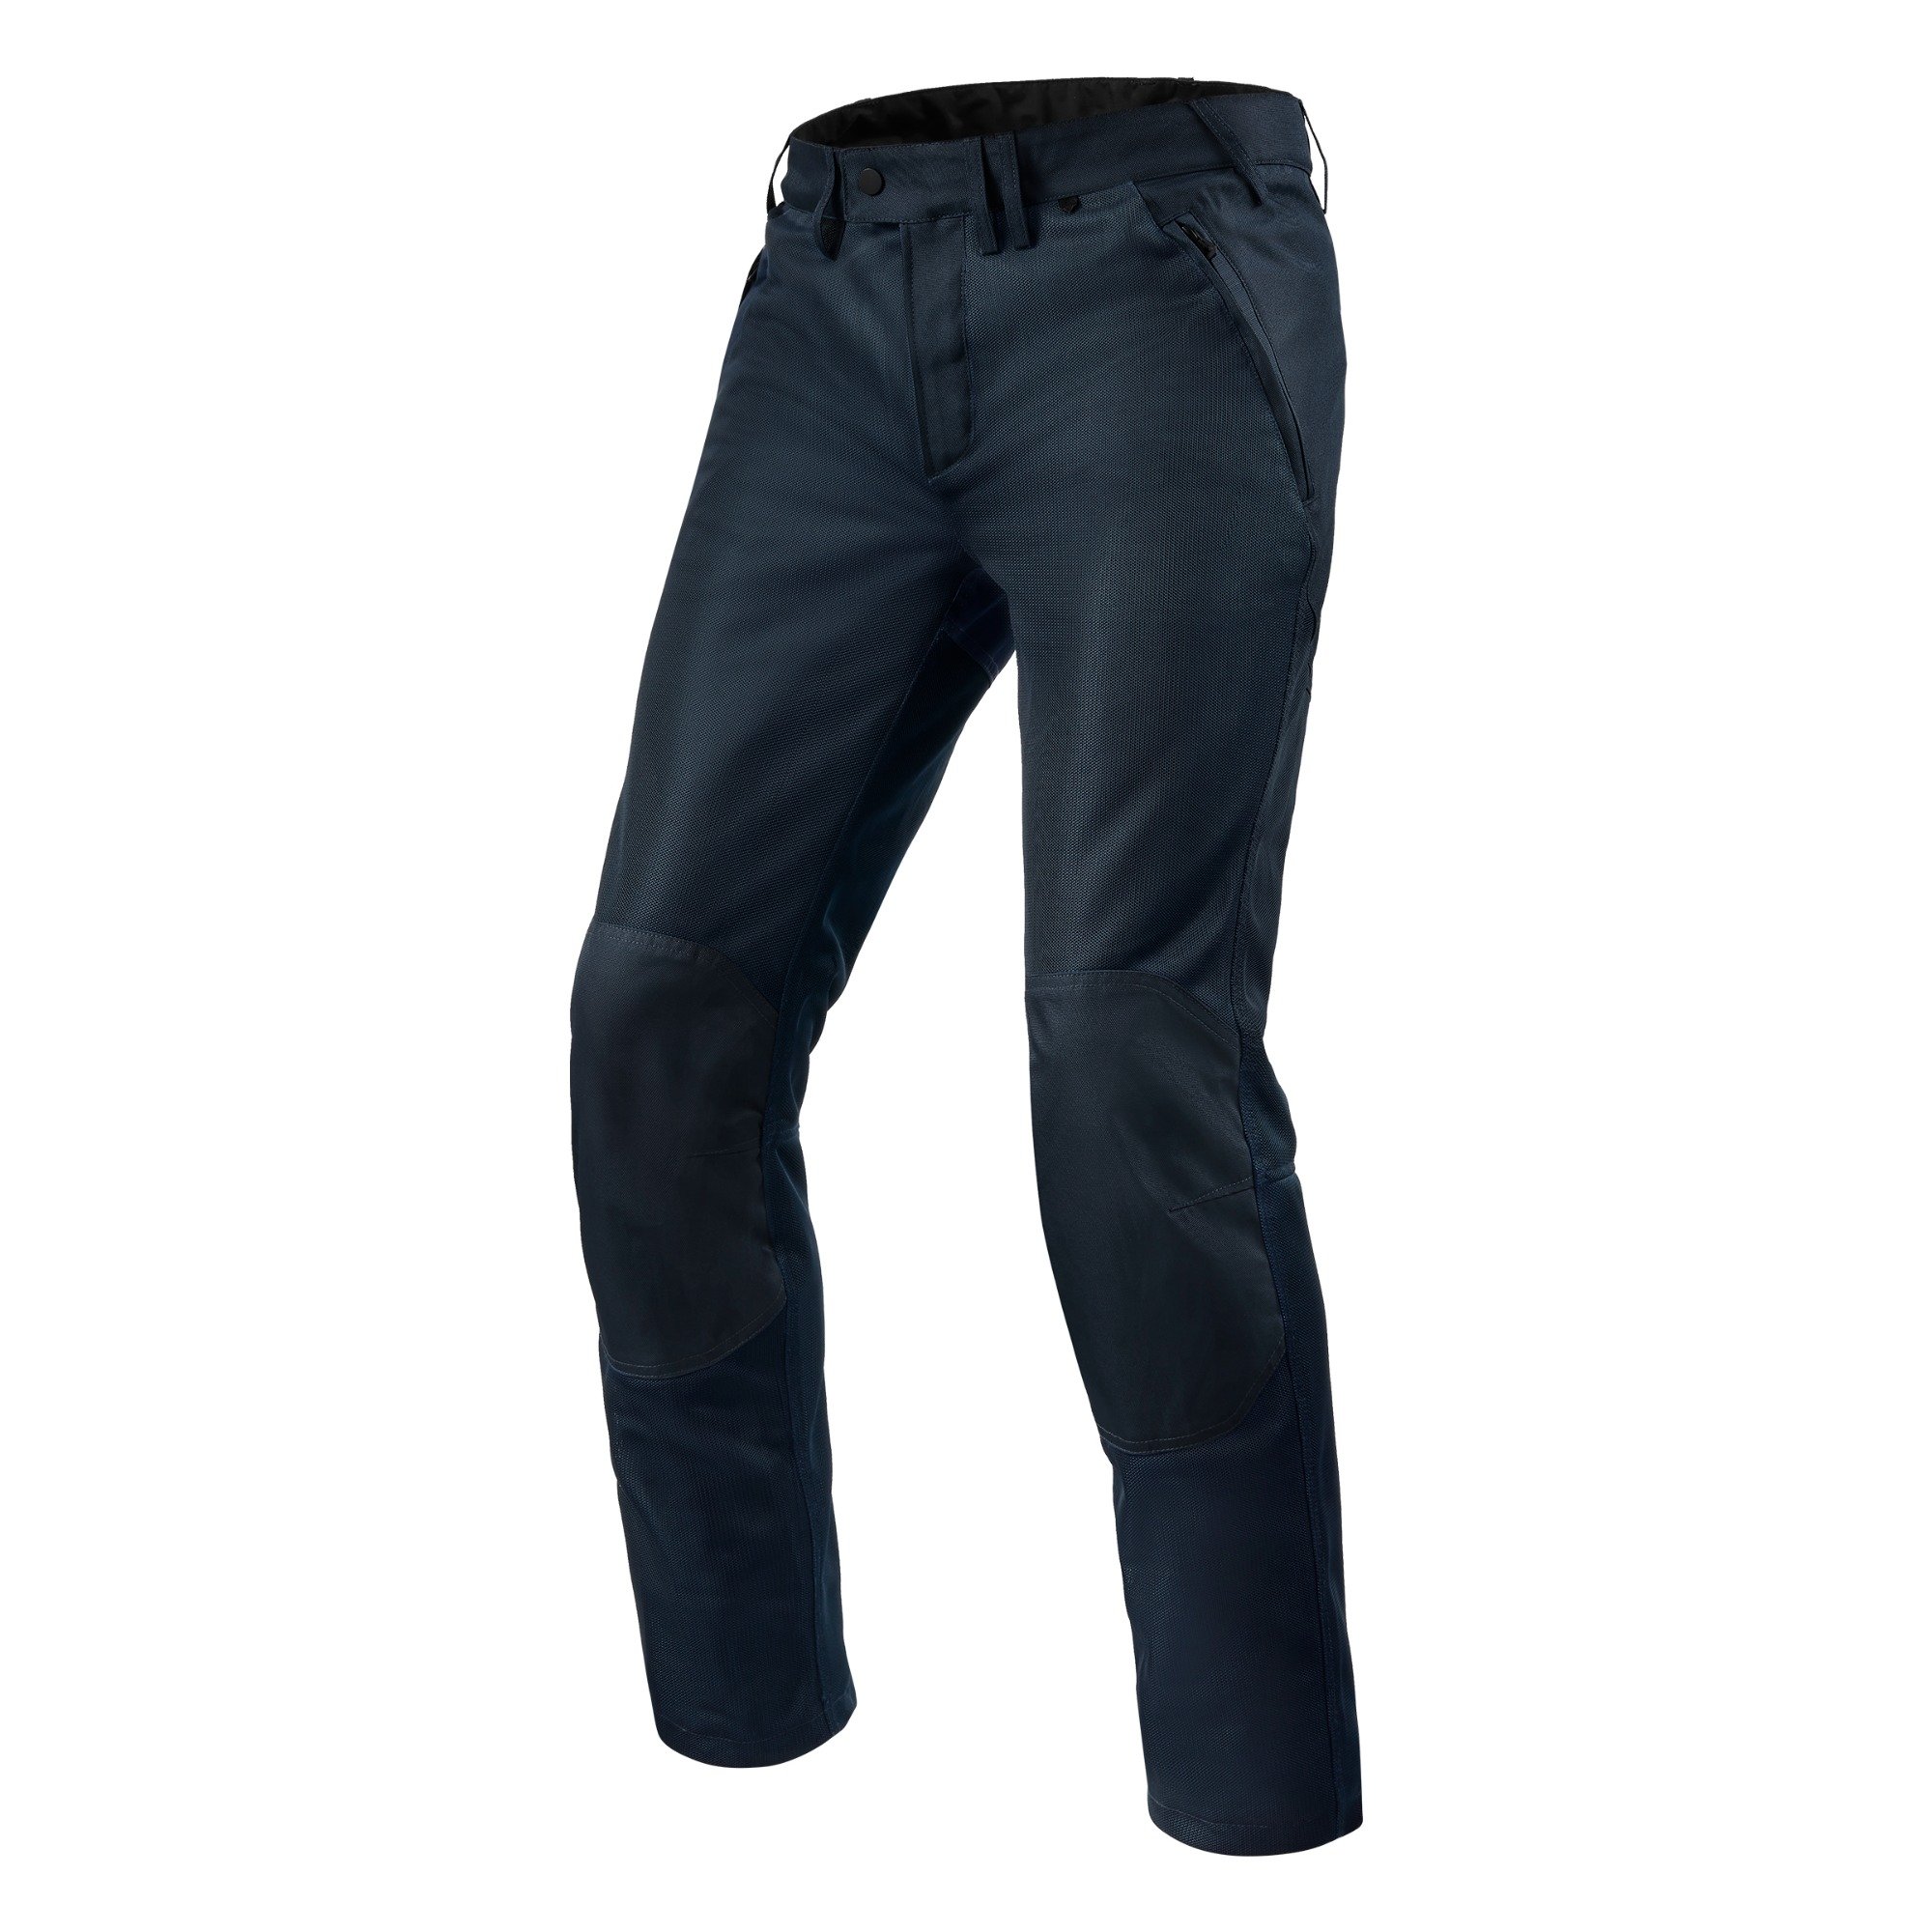 Image of REV'IT! Pants Eclipse 2 Dark Blue Short Motorcycle Pants Size S ID 8700001368995